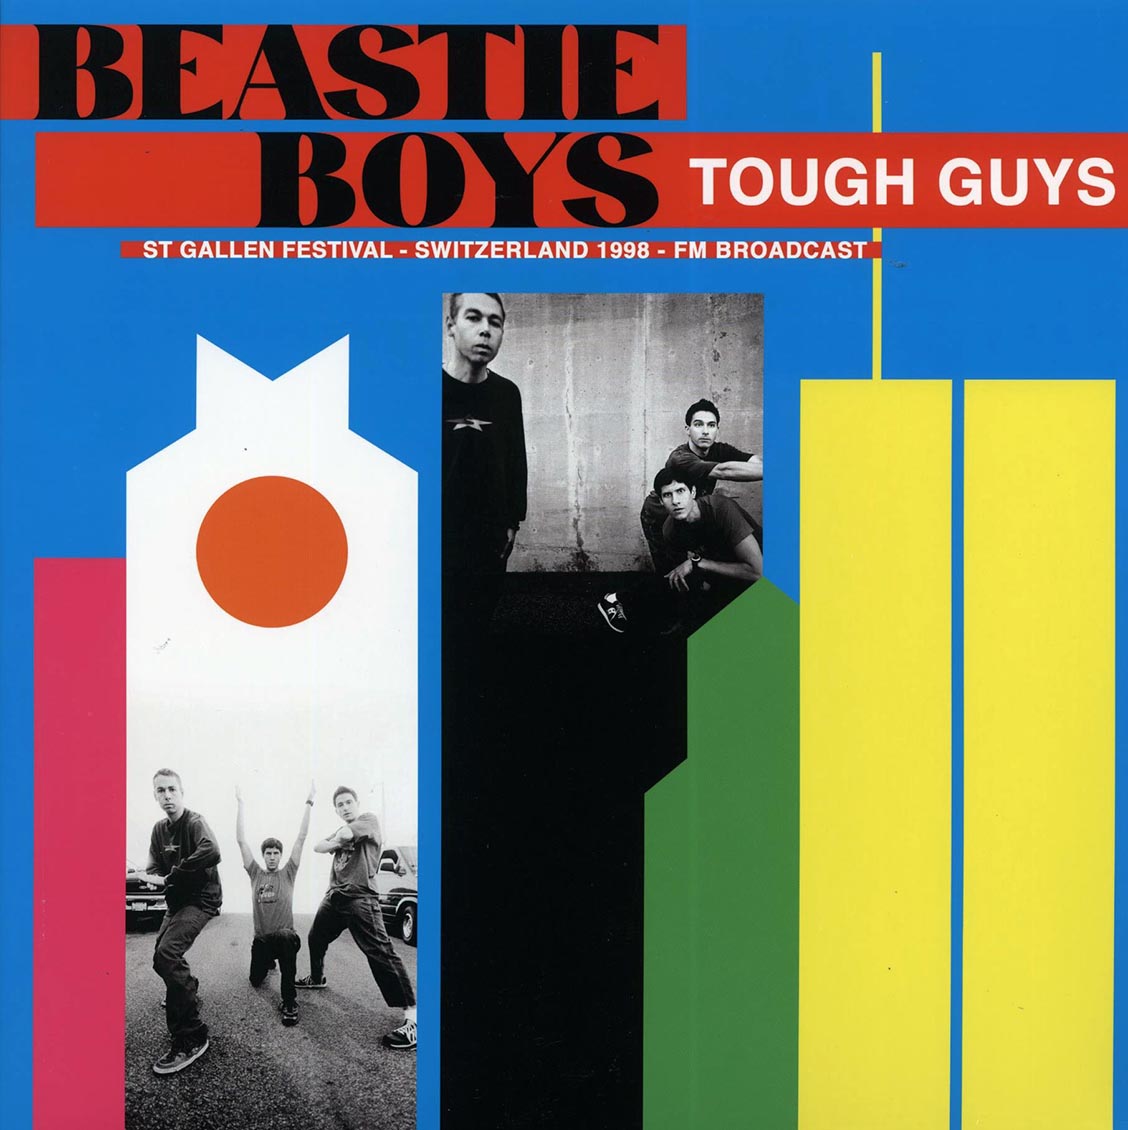 The Beastie Boys - Tough Guys: St. Gallen Festival, Switzerland 1998